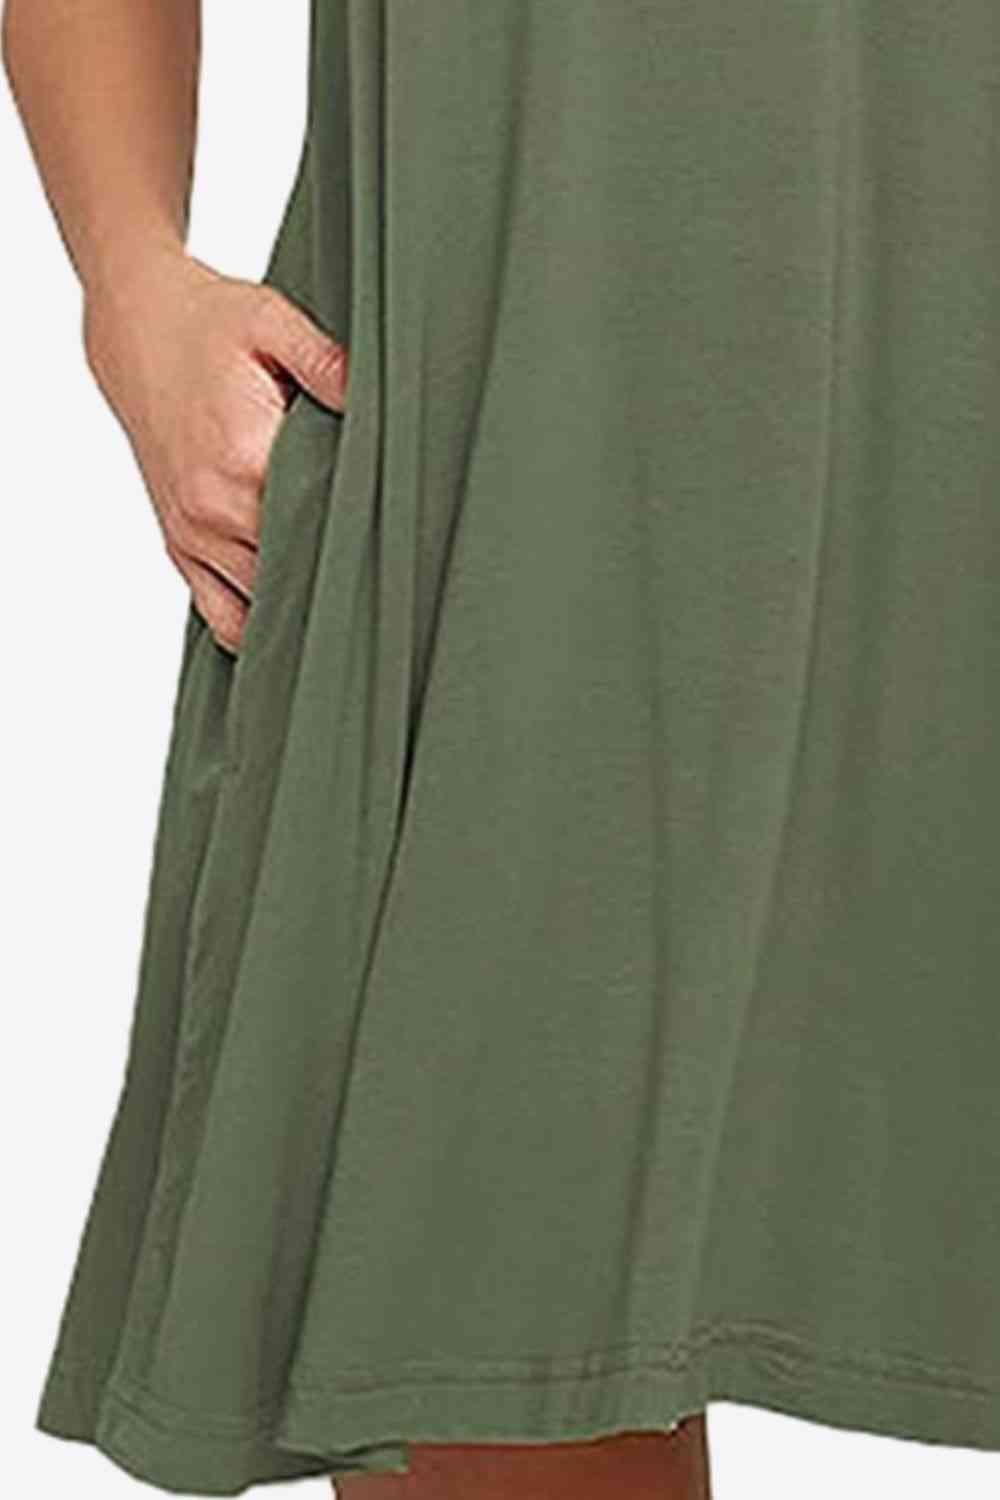 Full Size Round Neck Sleeveless Dress with Pockets - Immenzive